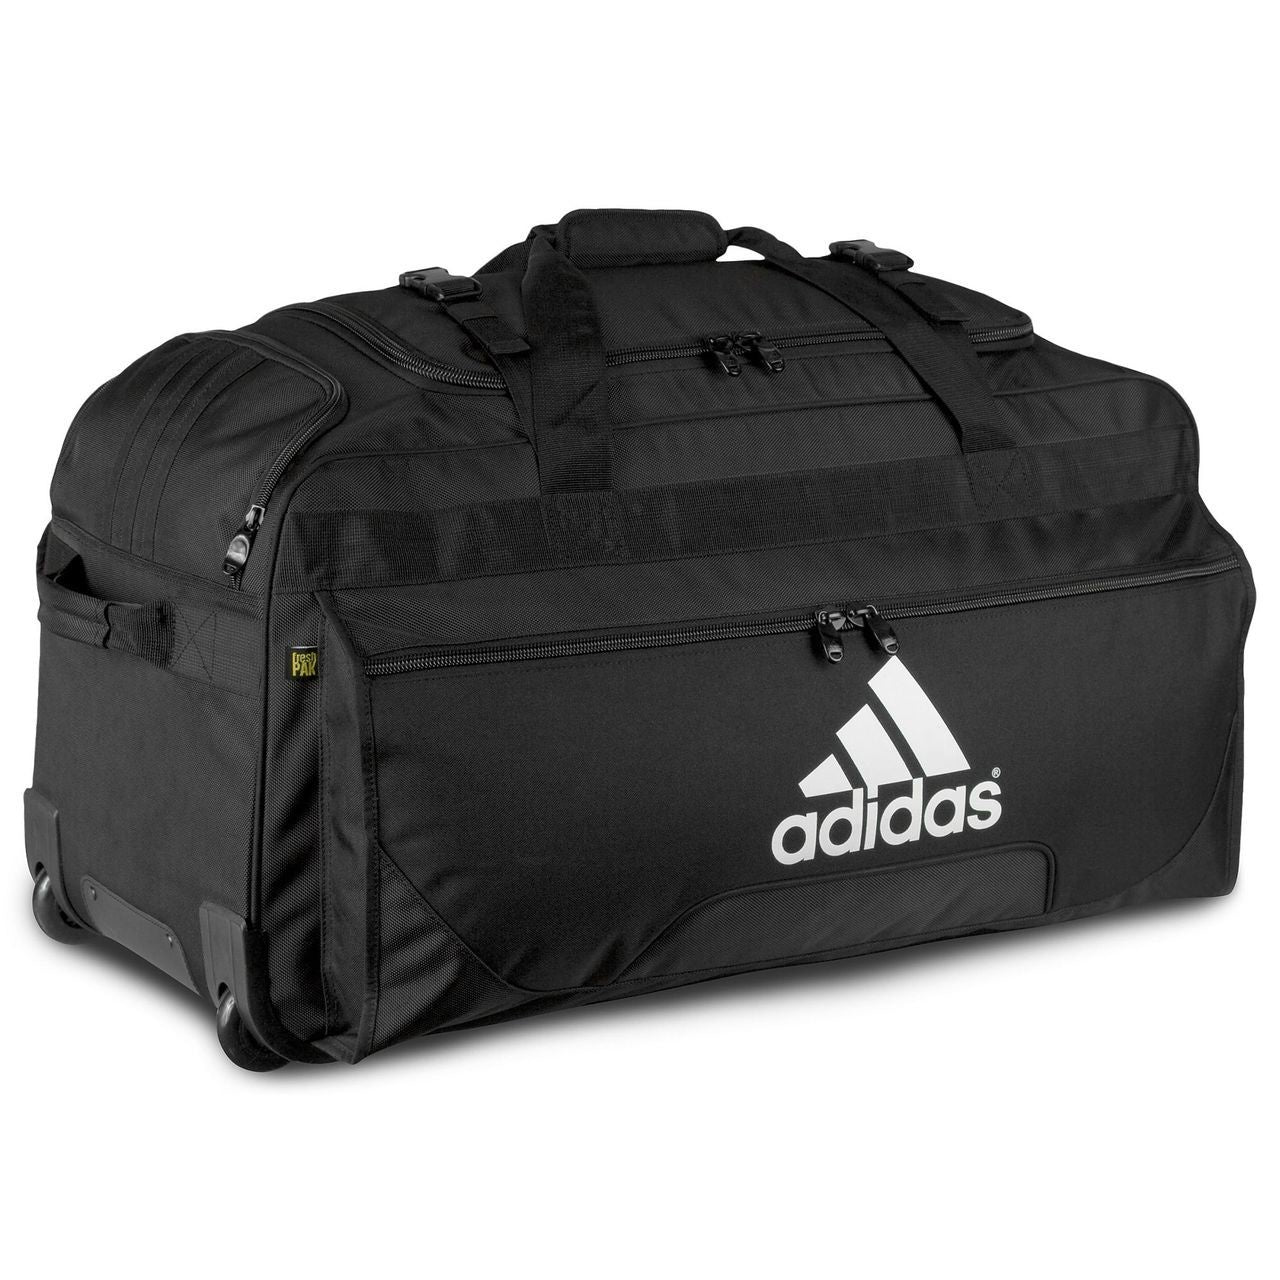 Adidas Team Travel Bag